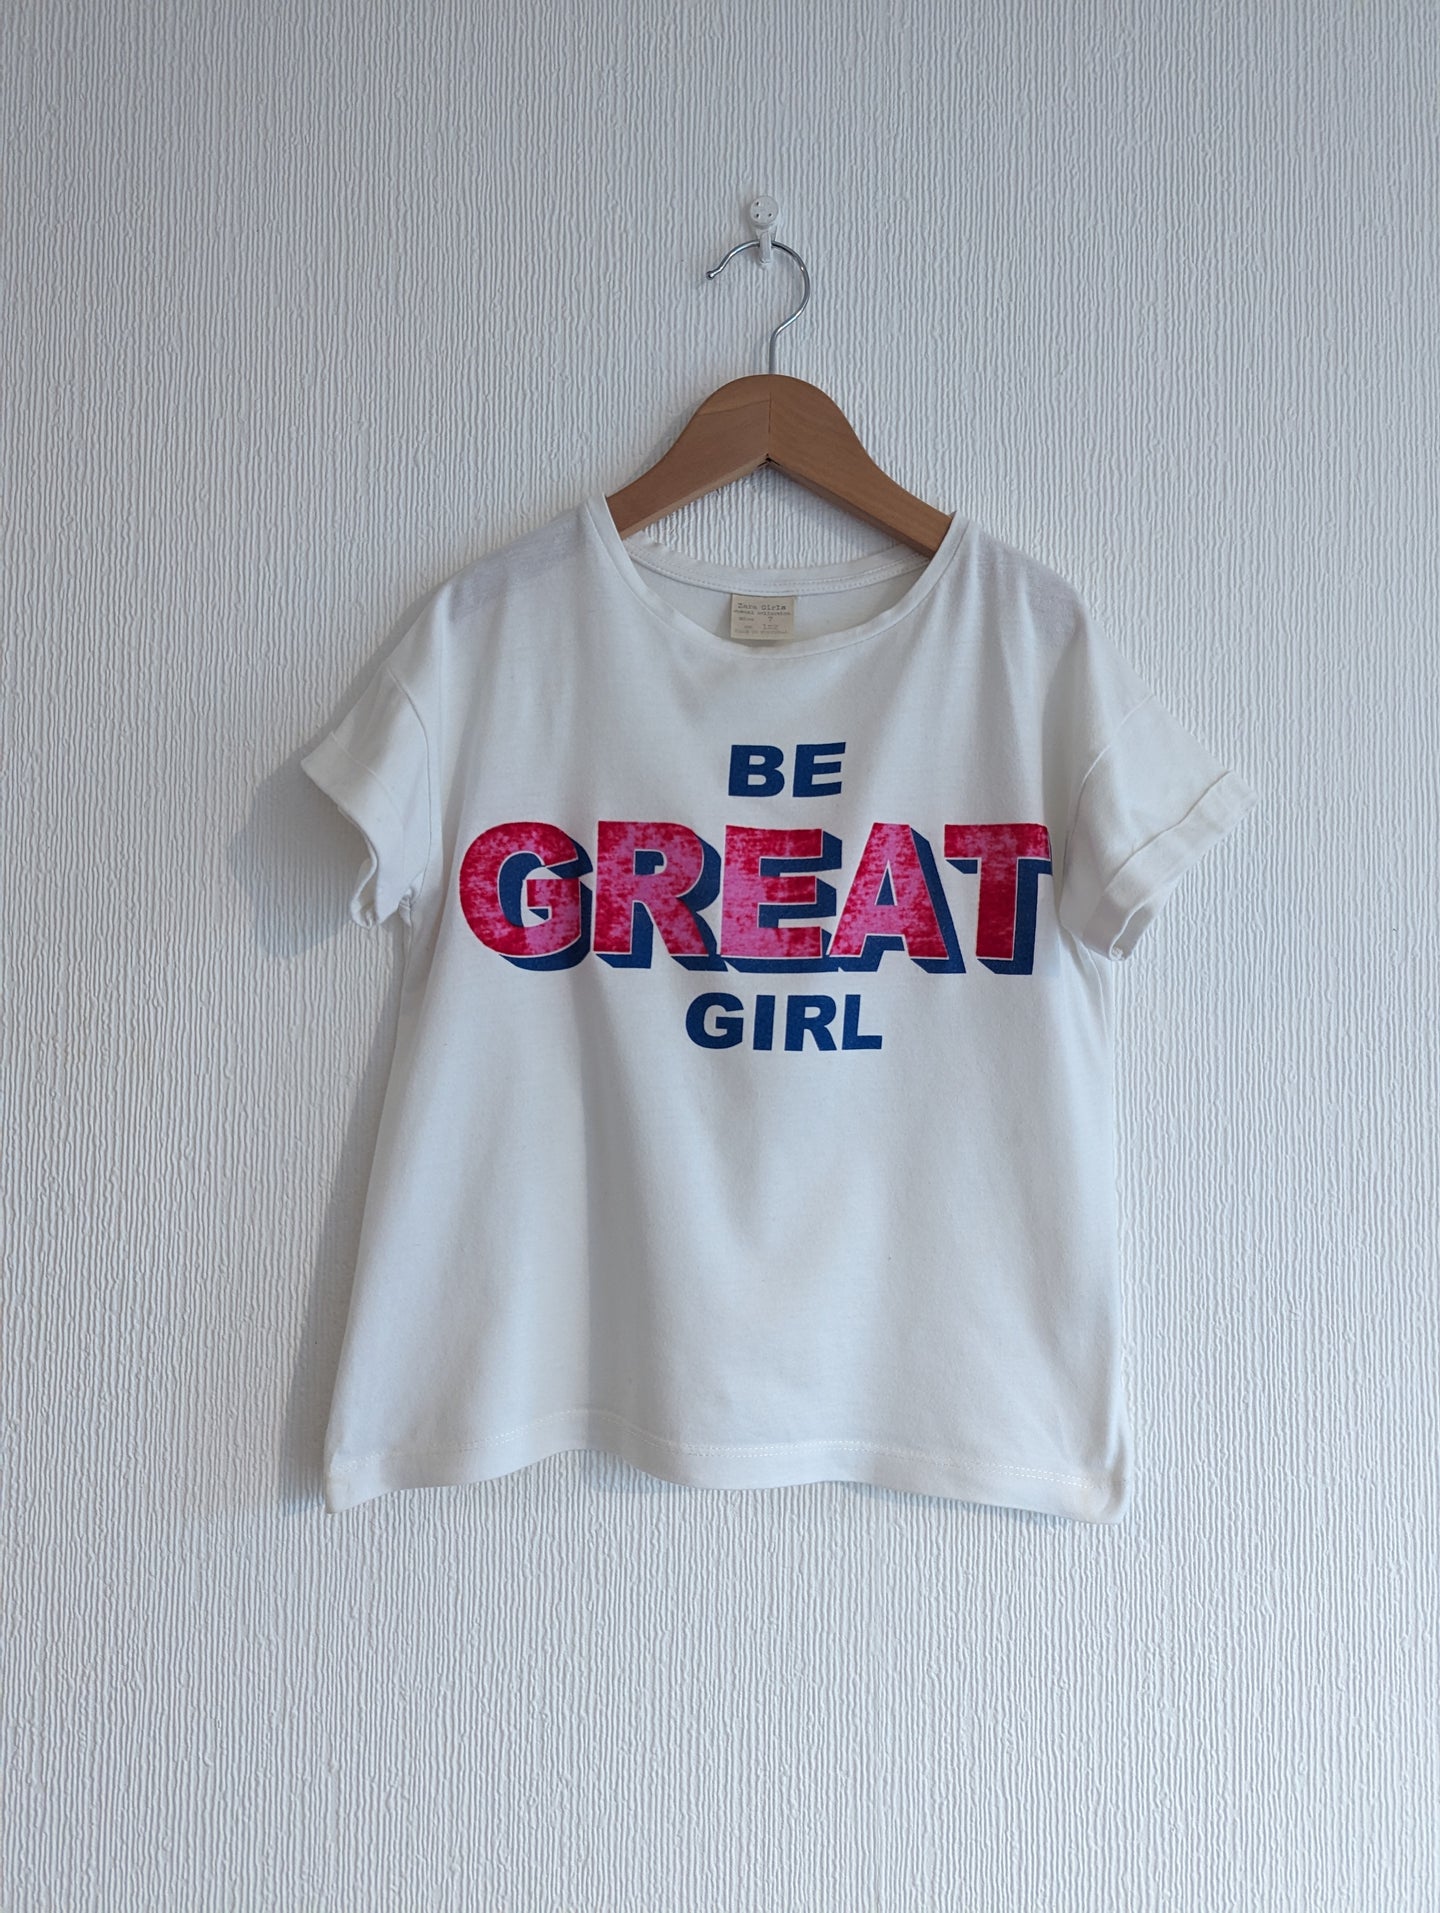 Be Great Girl Tee - 7 Years